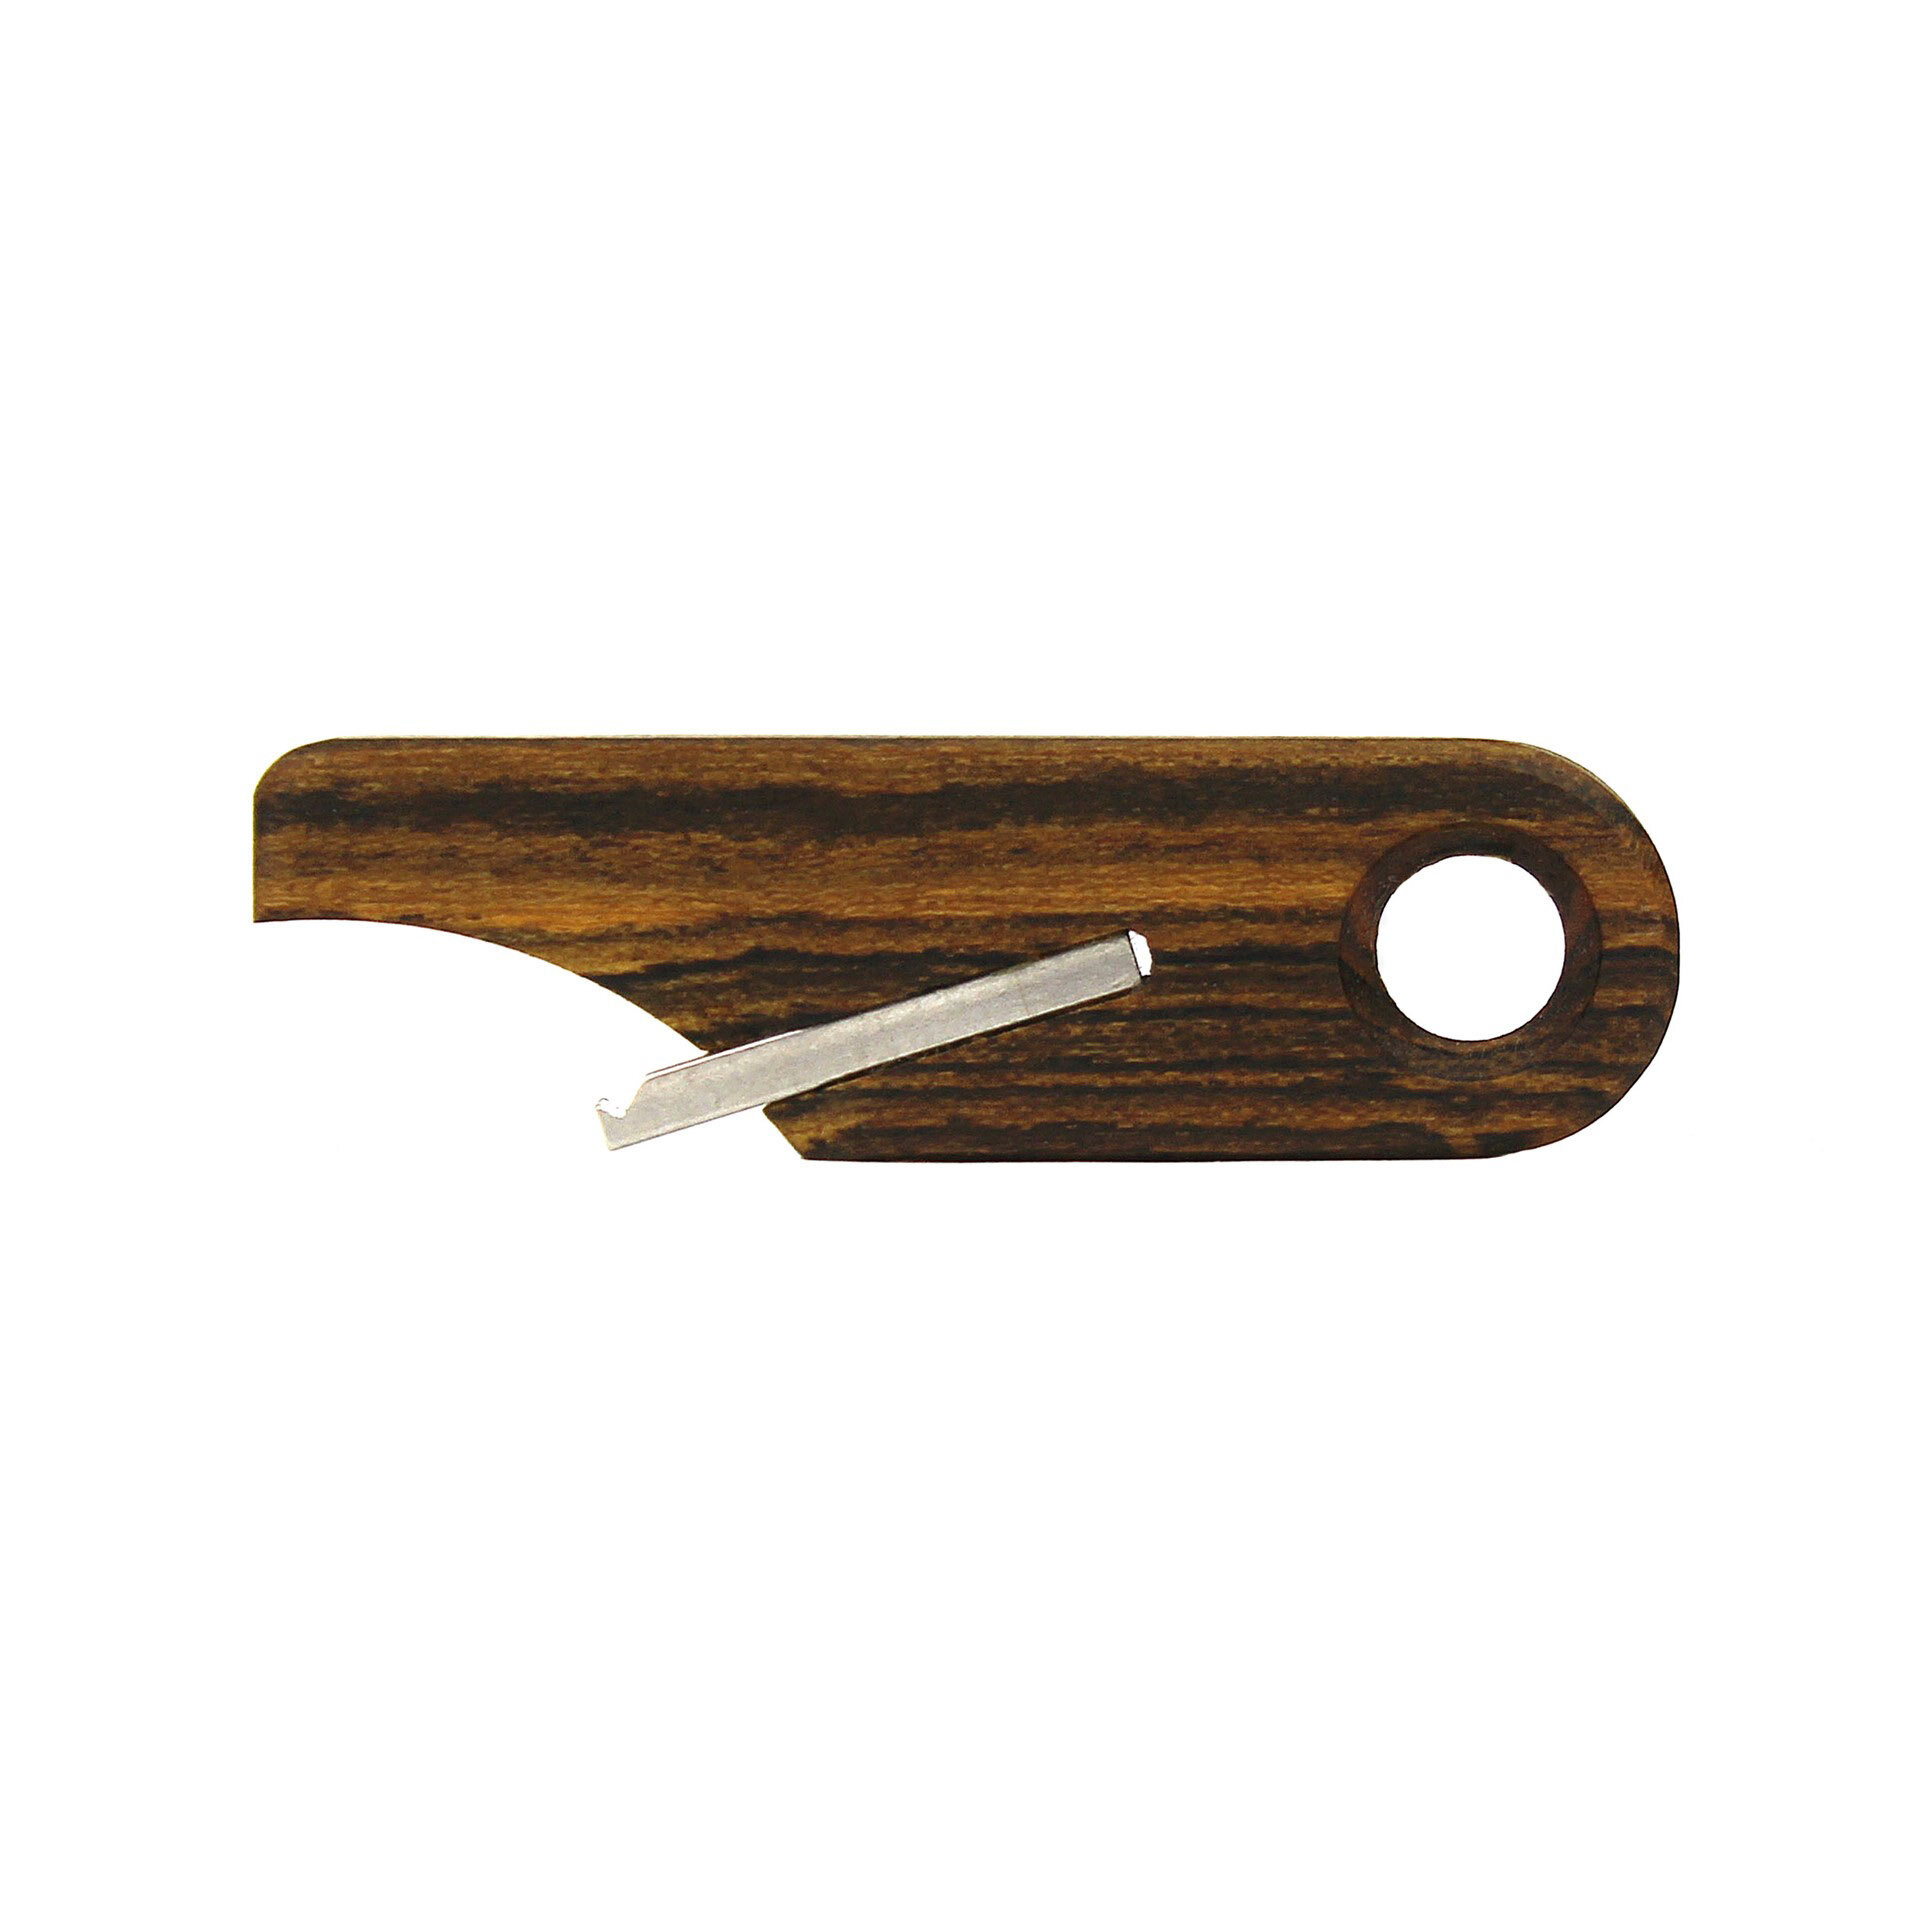 Wooden Bottle Opener Keychain by Rift Wood Company - Bocote.JPG